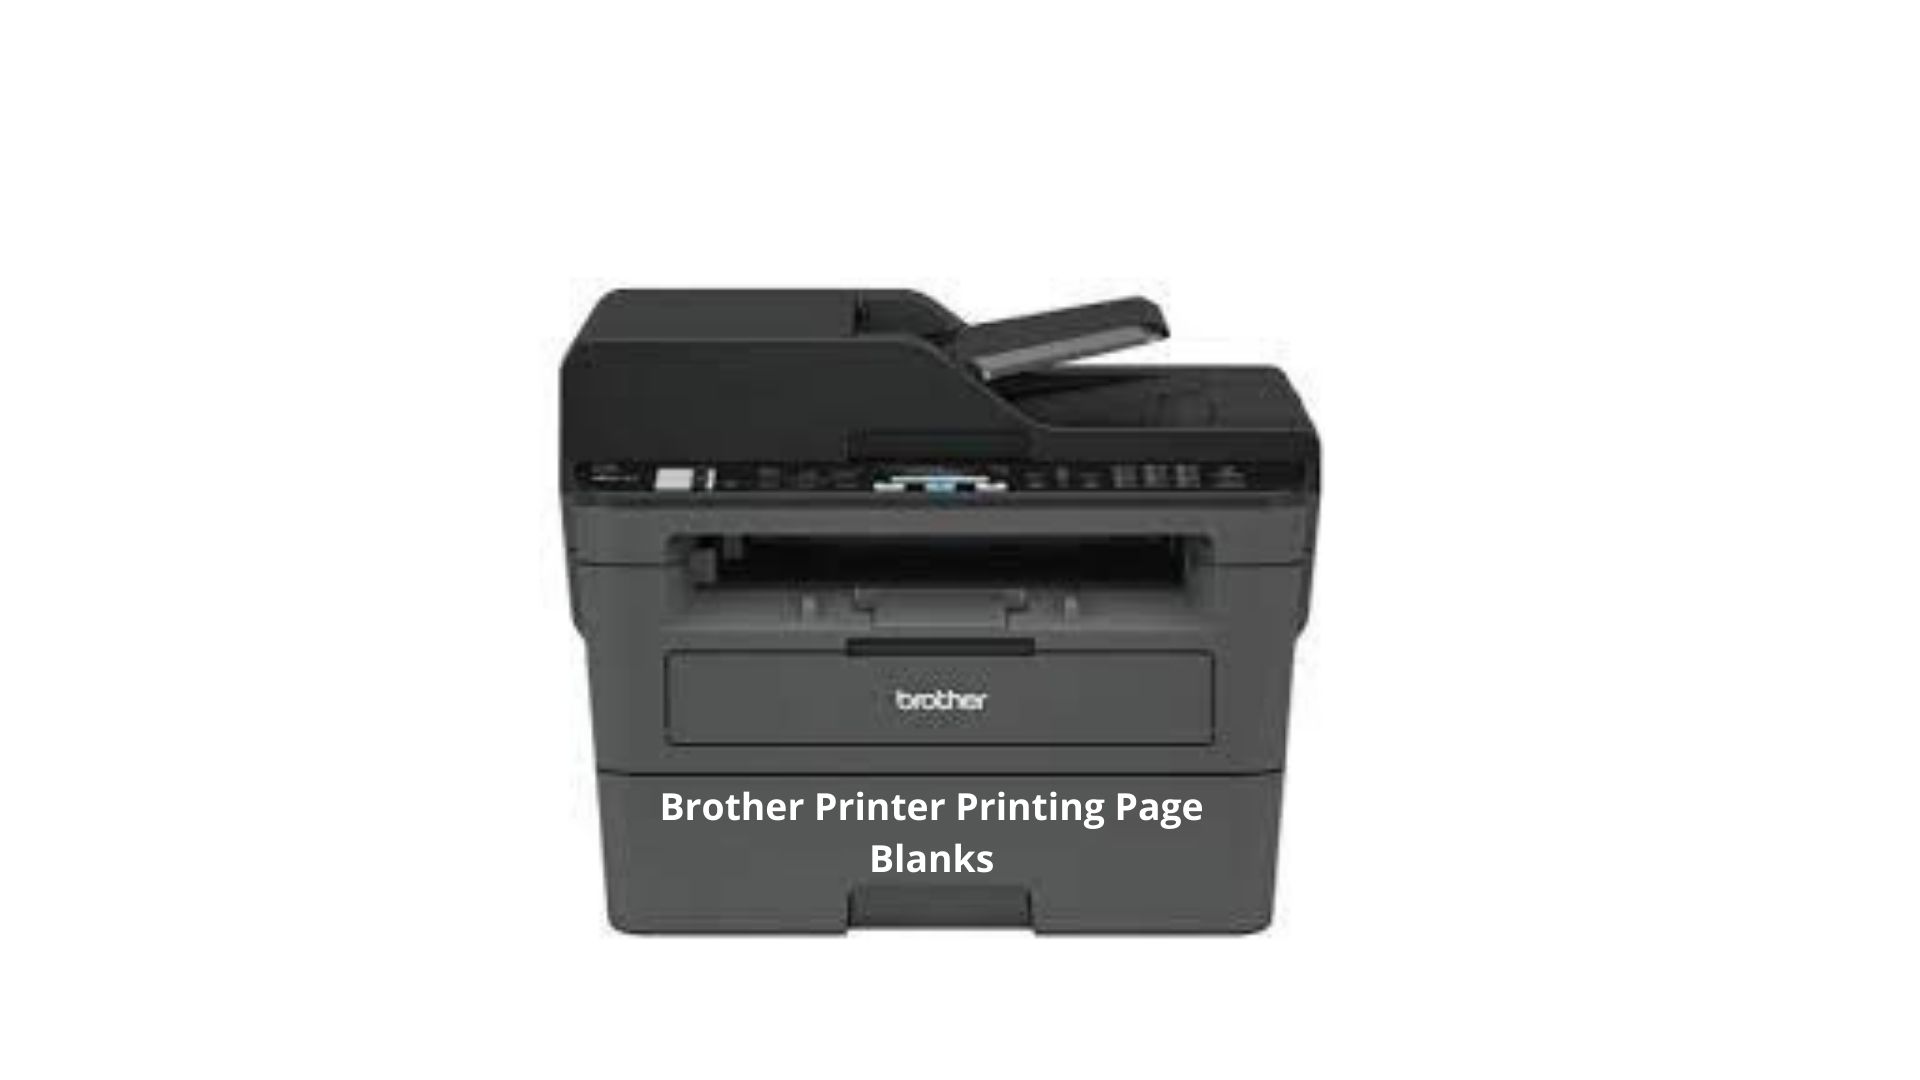 Brother Printer Printing Page Blanks